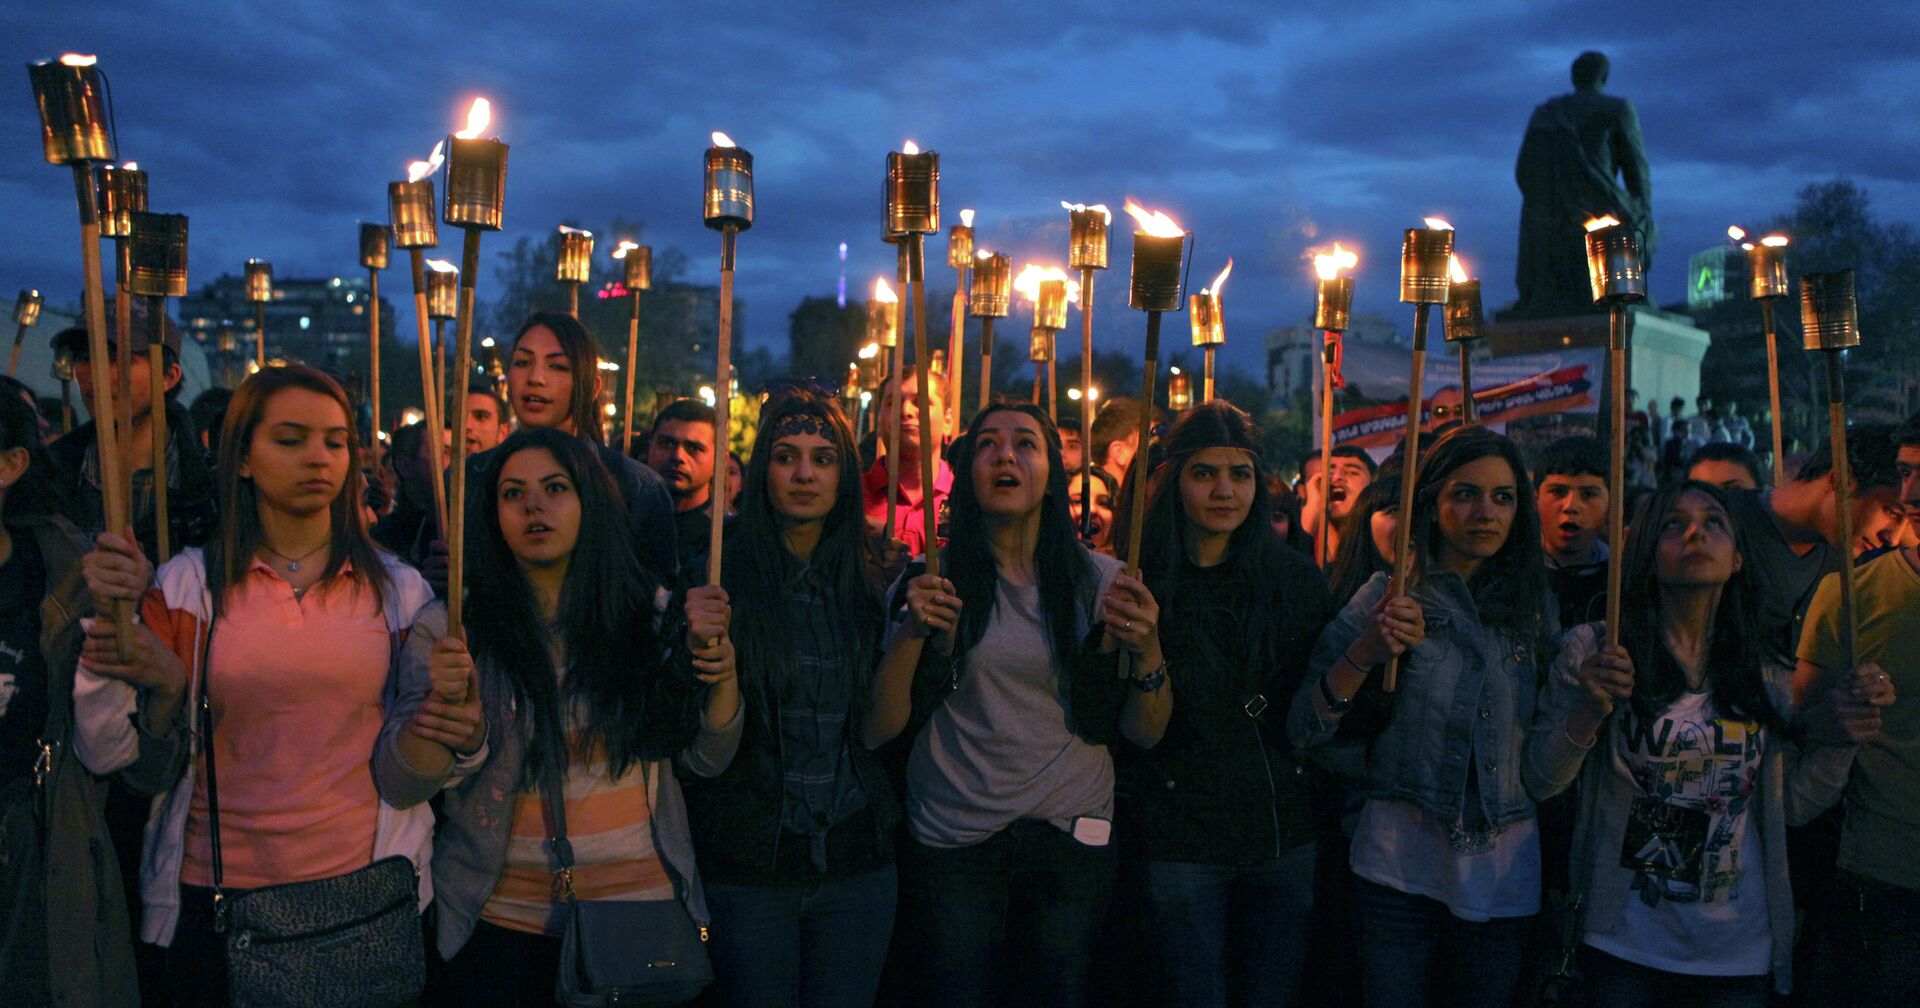 Шествие памяти жертв геноцида армян 1915 года - ИноСМИ, 1920, 28.04.2021